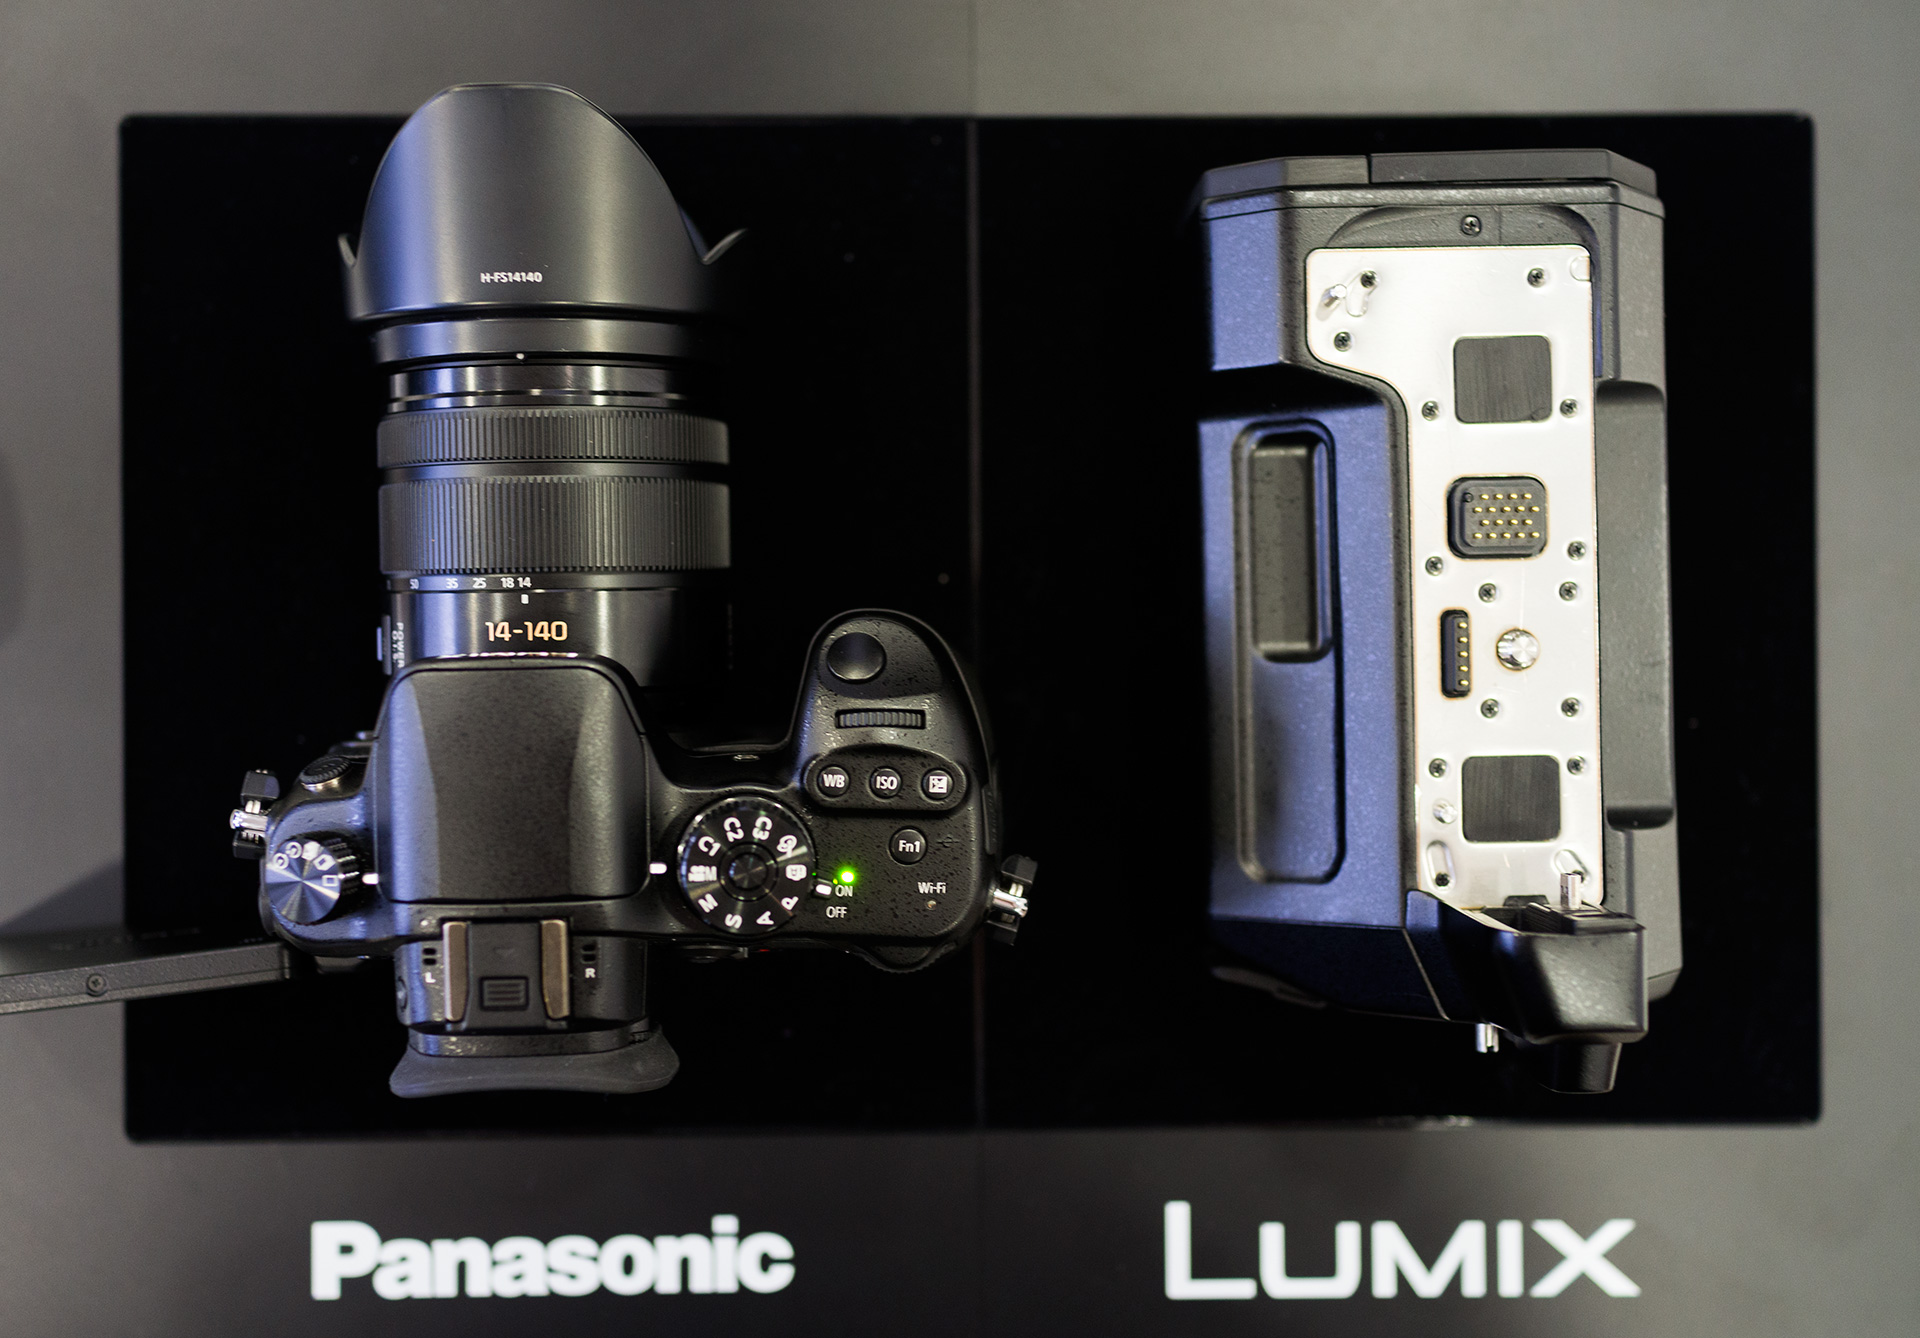 gerucht kreupel zien Hands-on preview of the powerful 4K shooting Panasonic GH4! - EOSHD.com -  Filmmaking Gear and Camera Reviews